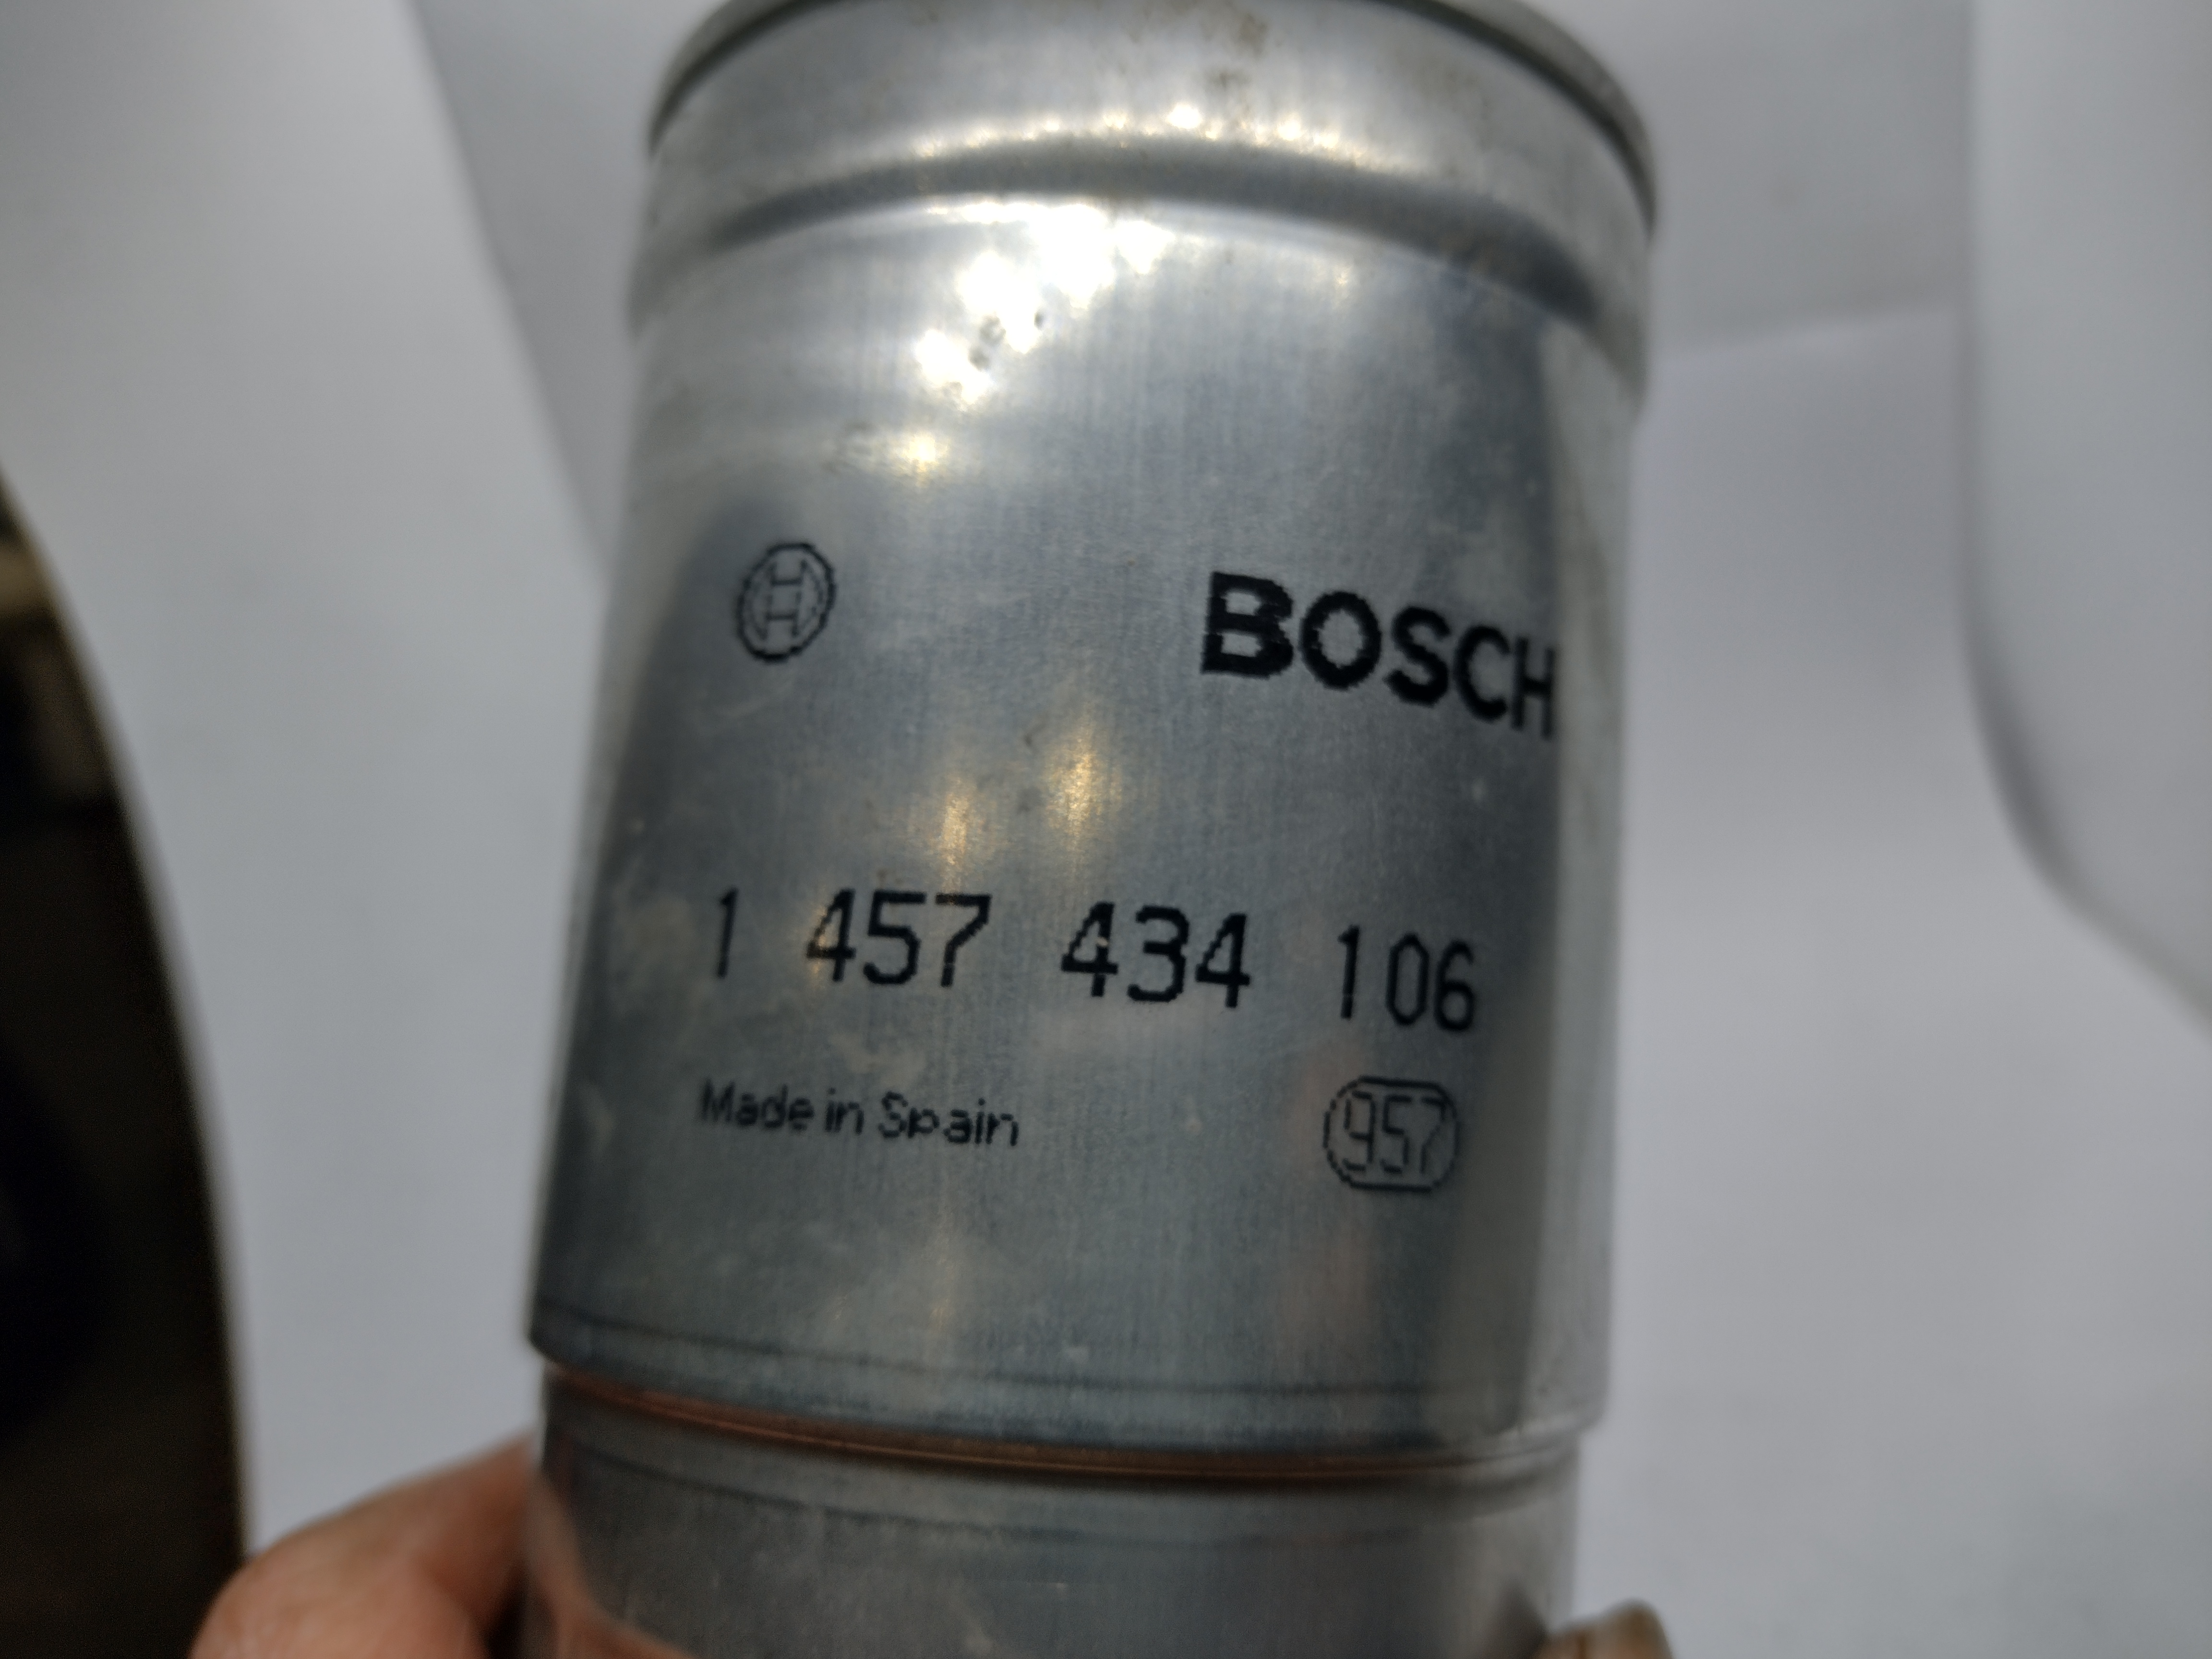 Original Peugeot / Bosch Kraftstofffilter 1 457 434 106 NEU NOS NEW